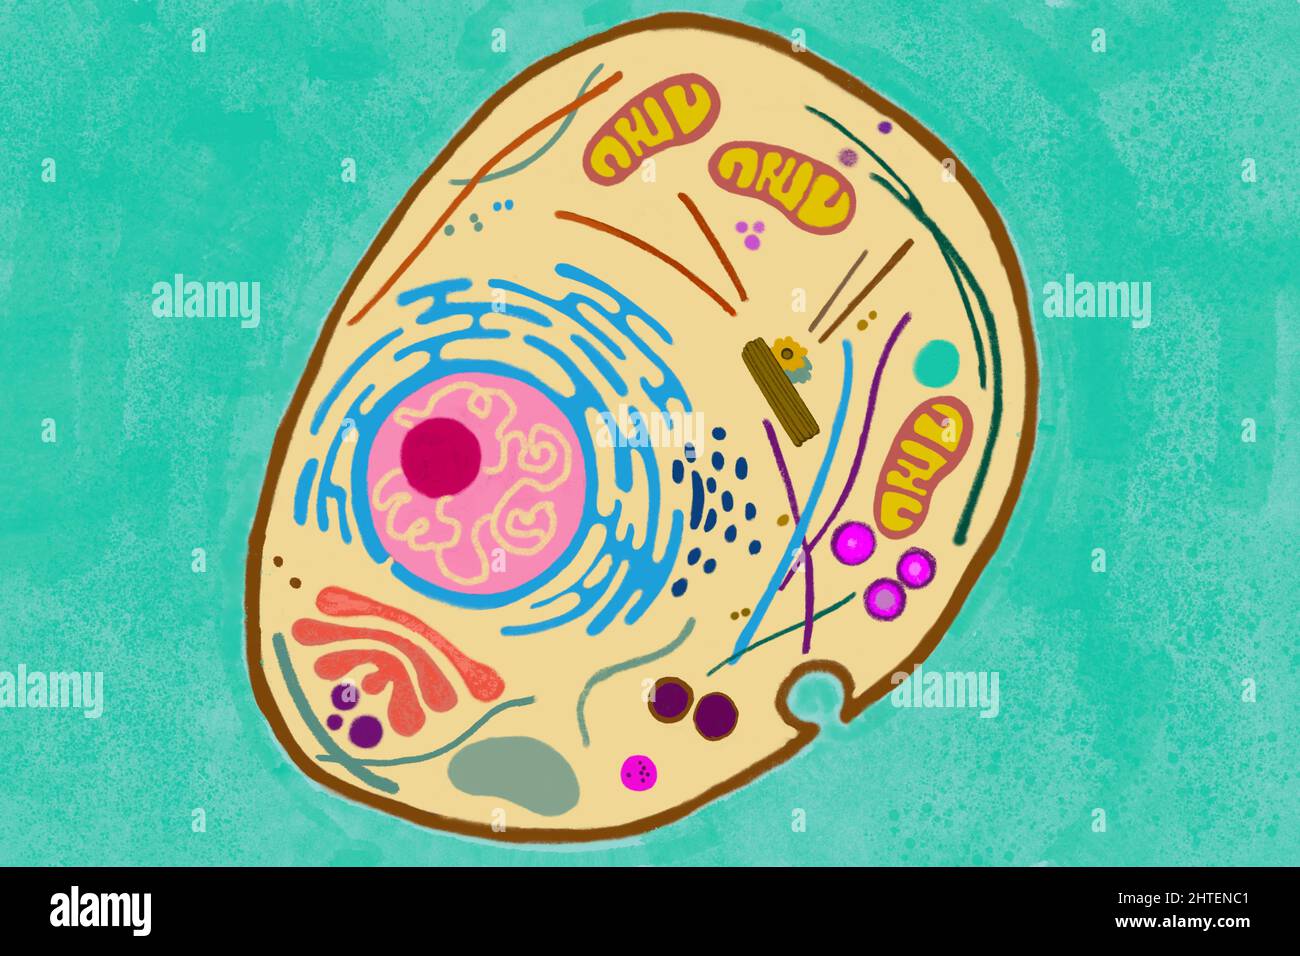 Animal cell illustration shows nucleous, ribosom, lysosome, nuclear envelope, nucleus, cytoplasm, golgi apparatus, endoplasmic reticulum, cell membran Stock Photo